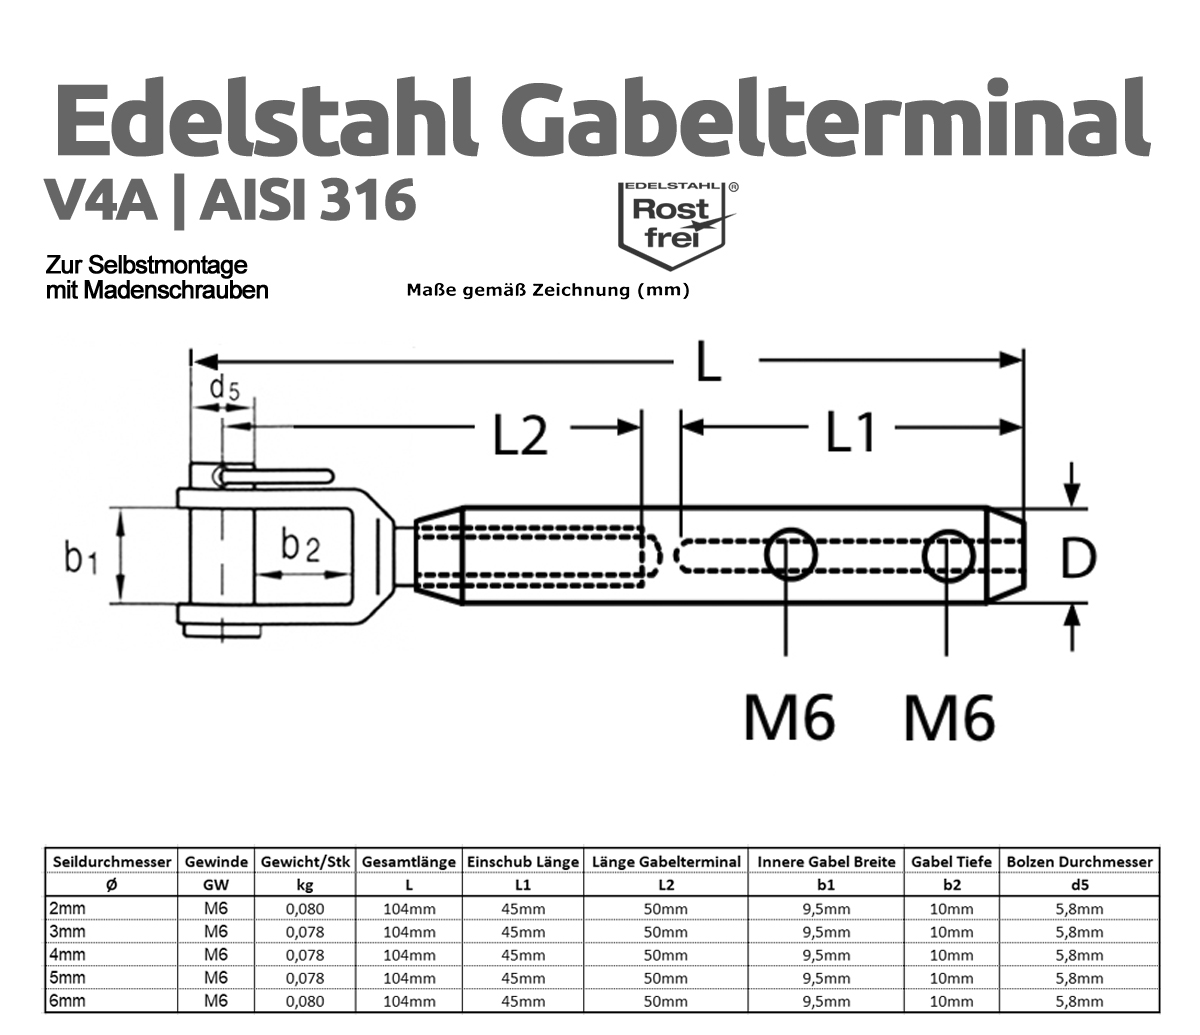 Edelstahl_Terminal_Selbstmontage_Gabelterminal_Grafik_1200HGanxGwKT0y2Q